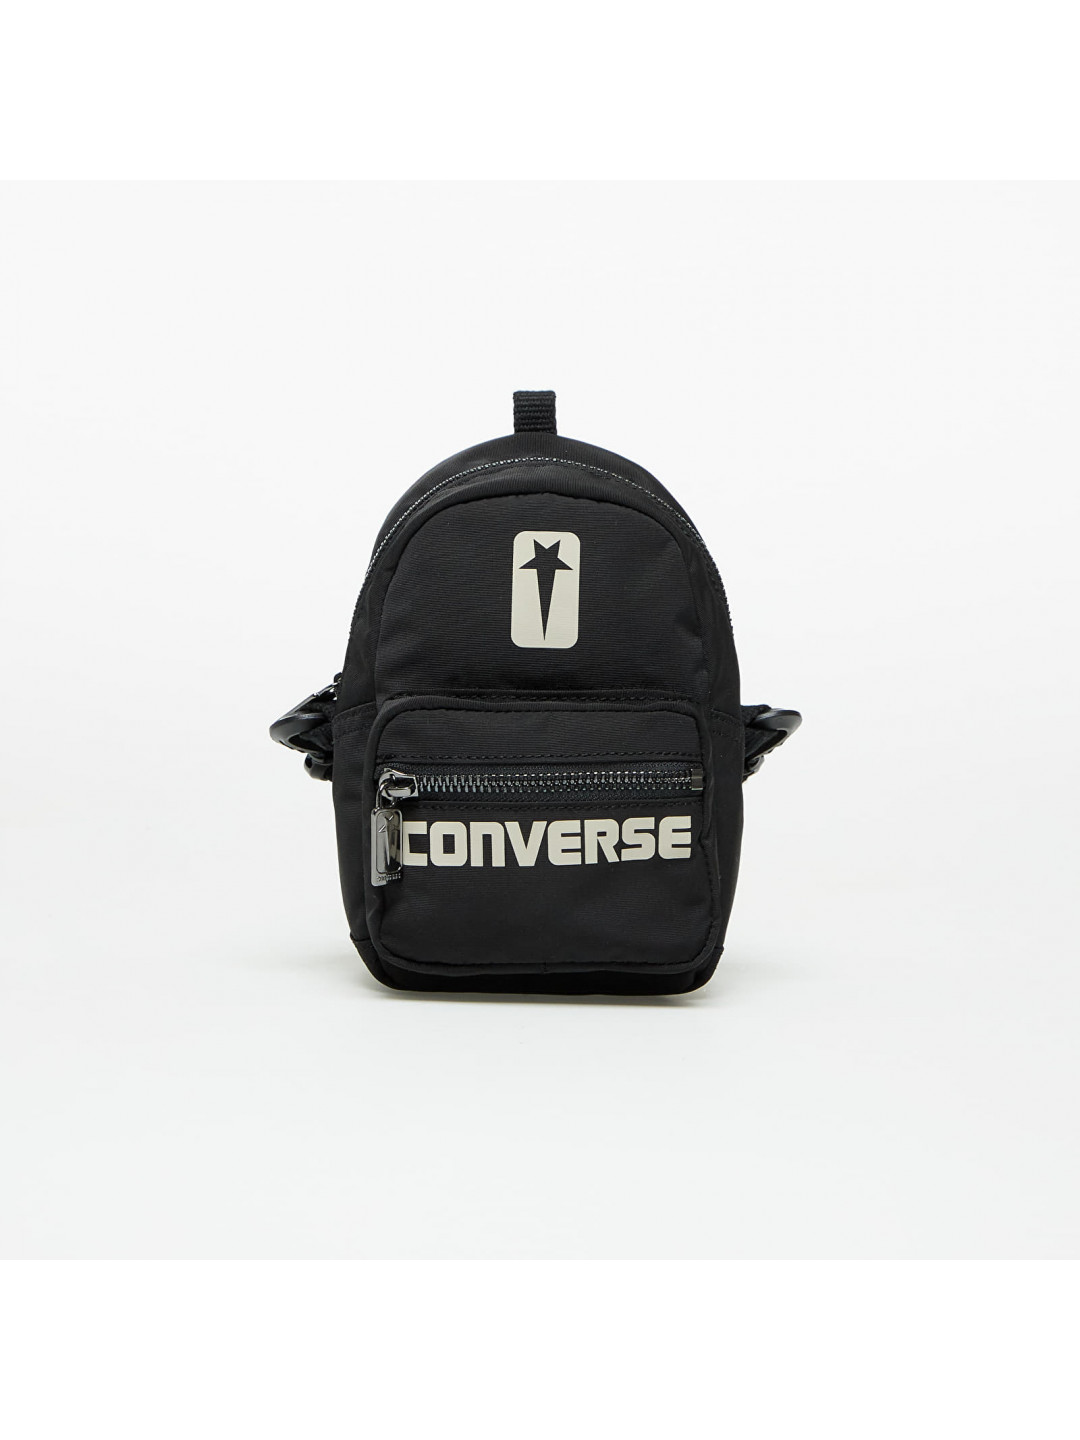 Converse x Rick Owens DRKSHDW Mini Go Backpack Black Pelican